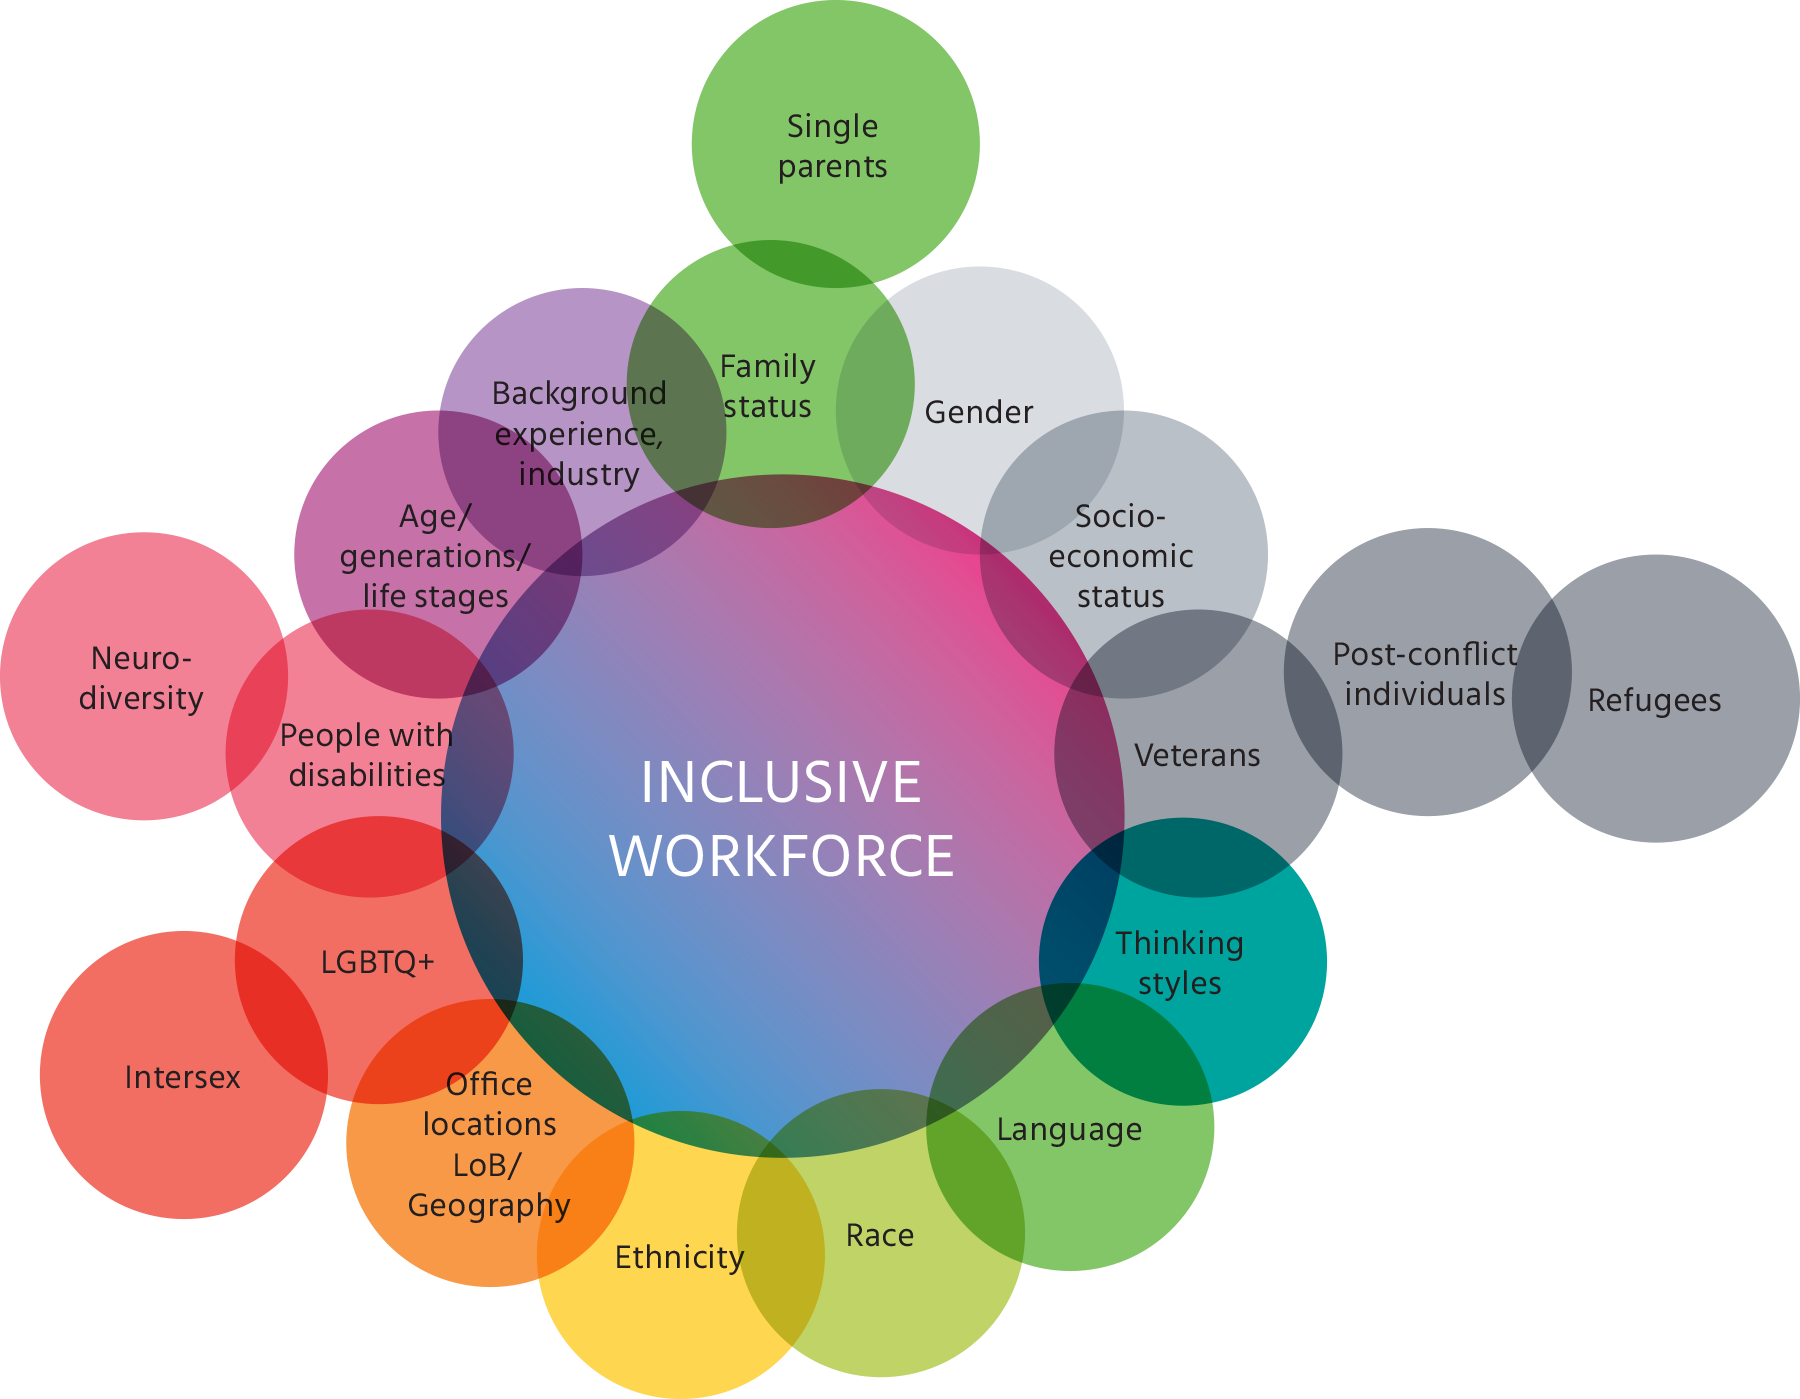 Inclusive workforce